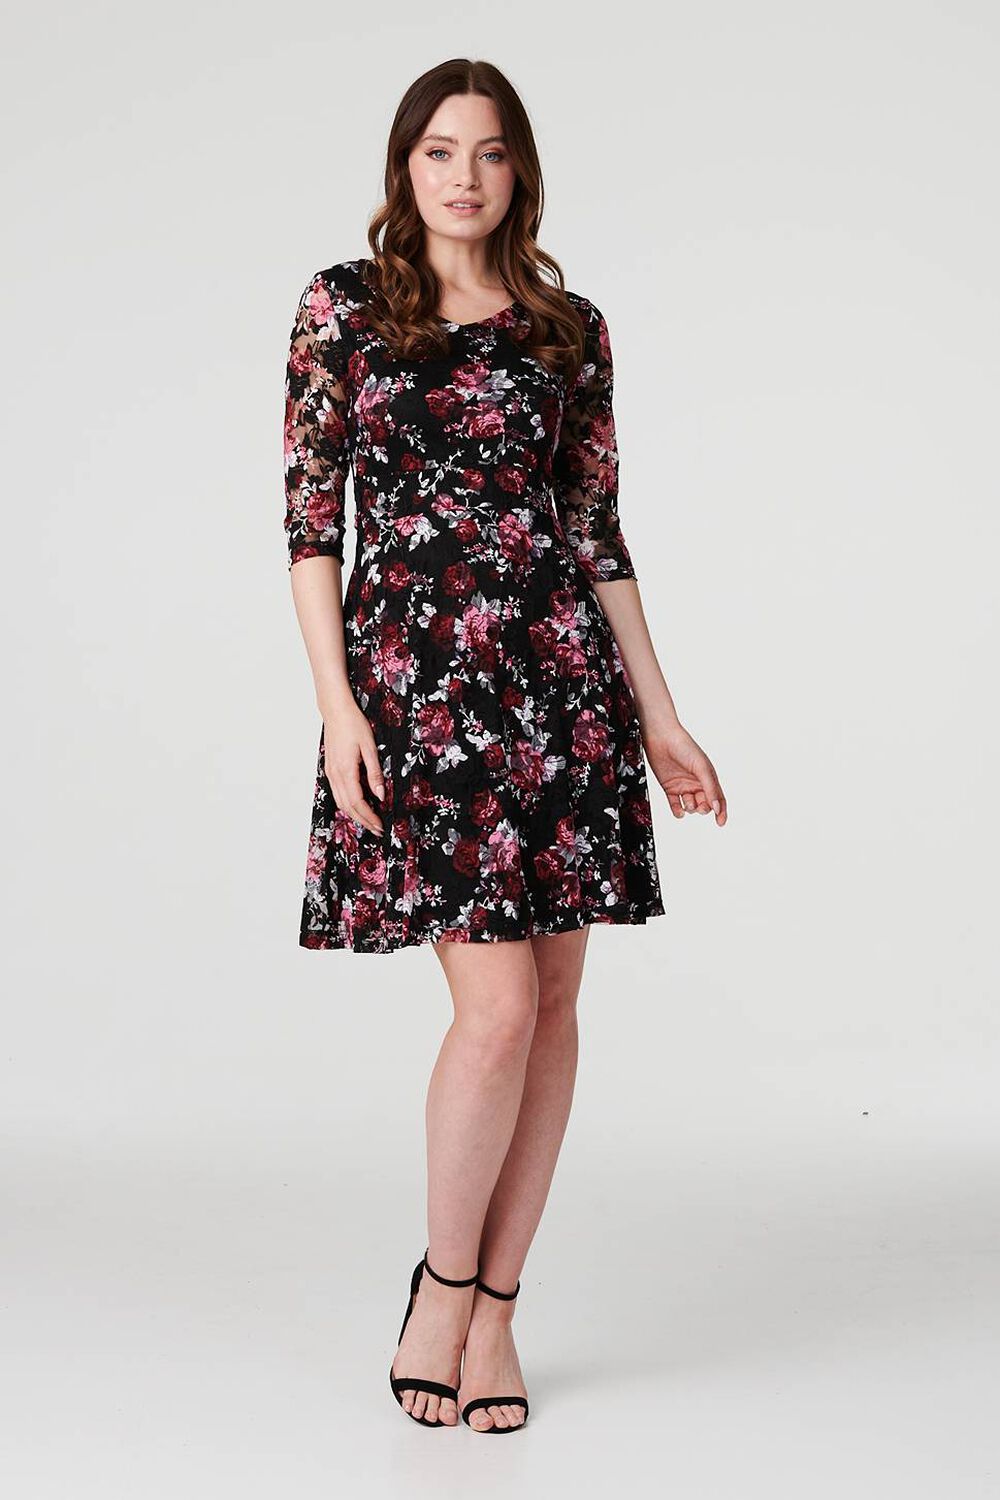 Izabel London Red - Rose Print Lace Overlay Short Dress, Size: 10